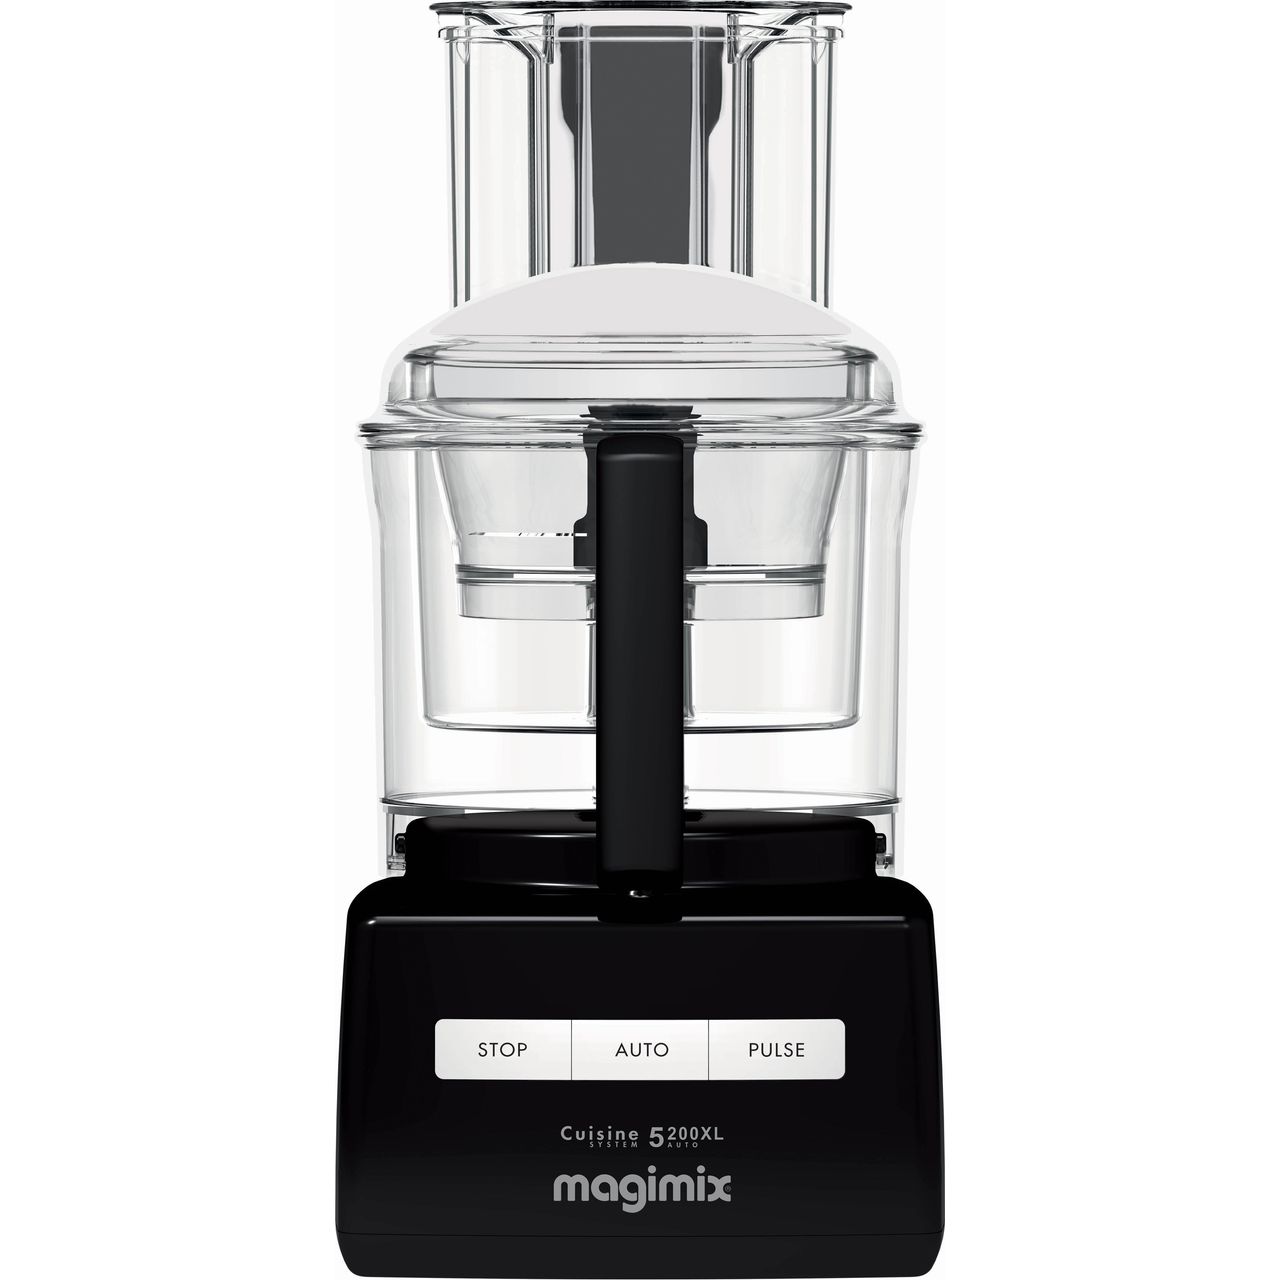 Magimix 5200XL Premium 18702 3.6 Litre Food Processor With 12 Accessories Review